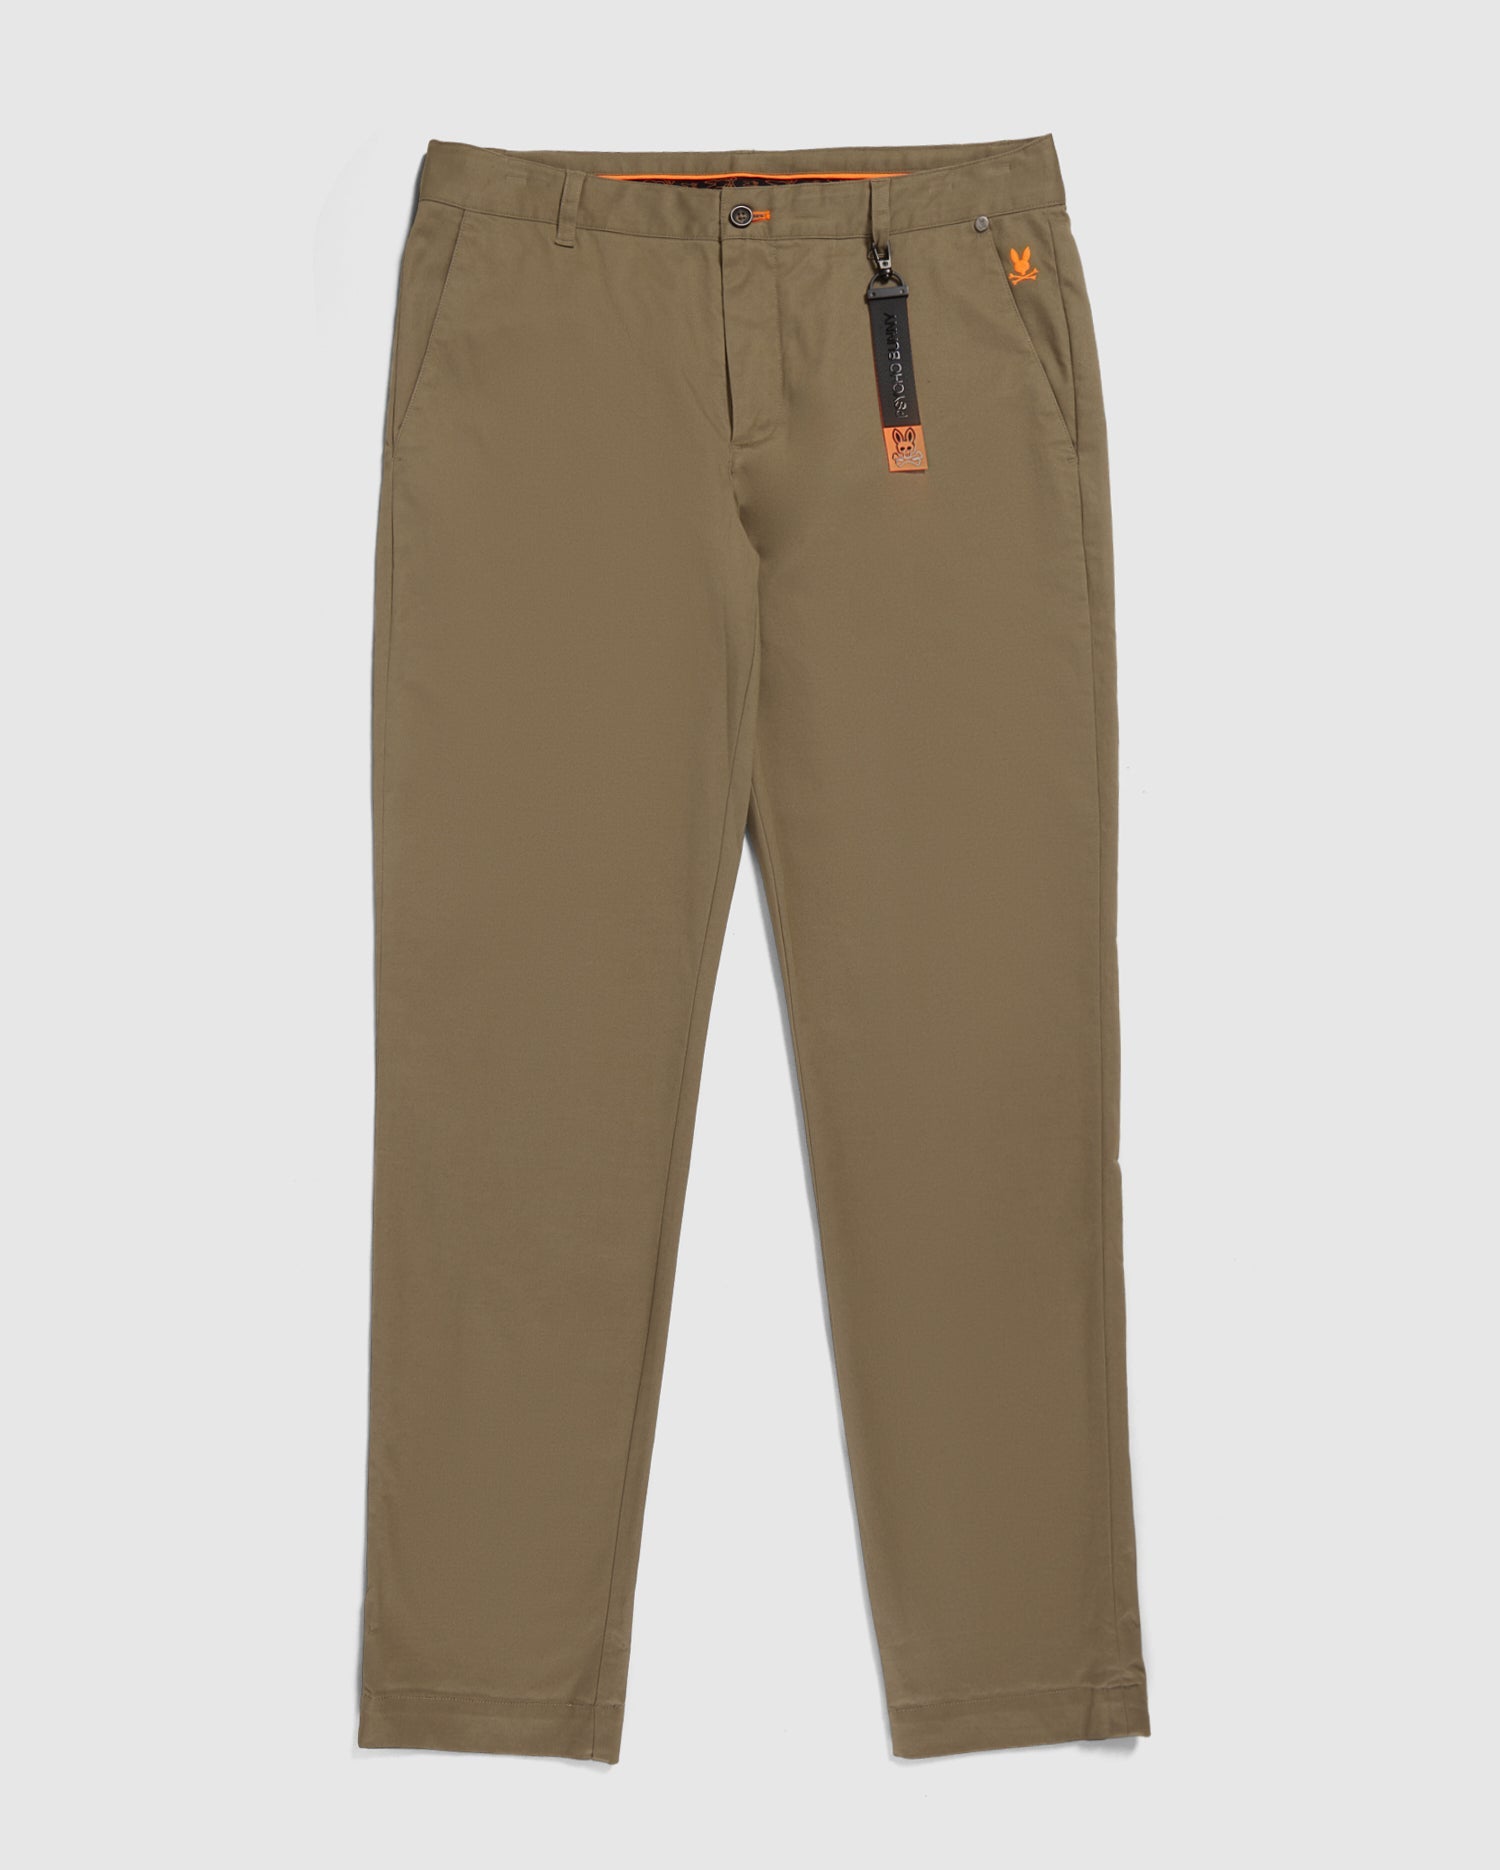 Men's Pants & Shorts: Chino, Sweatpants, cotton, denim